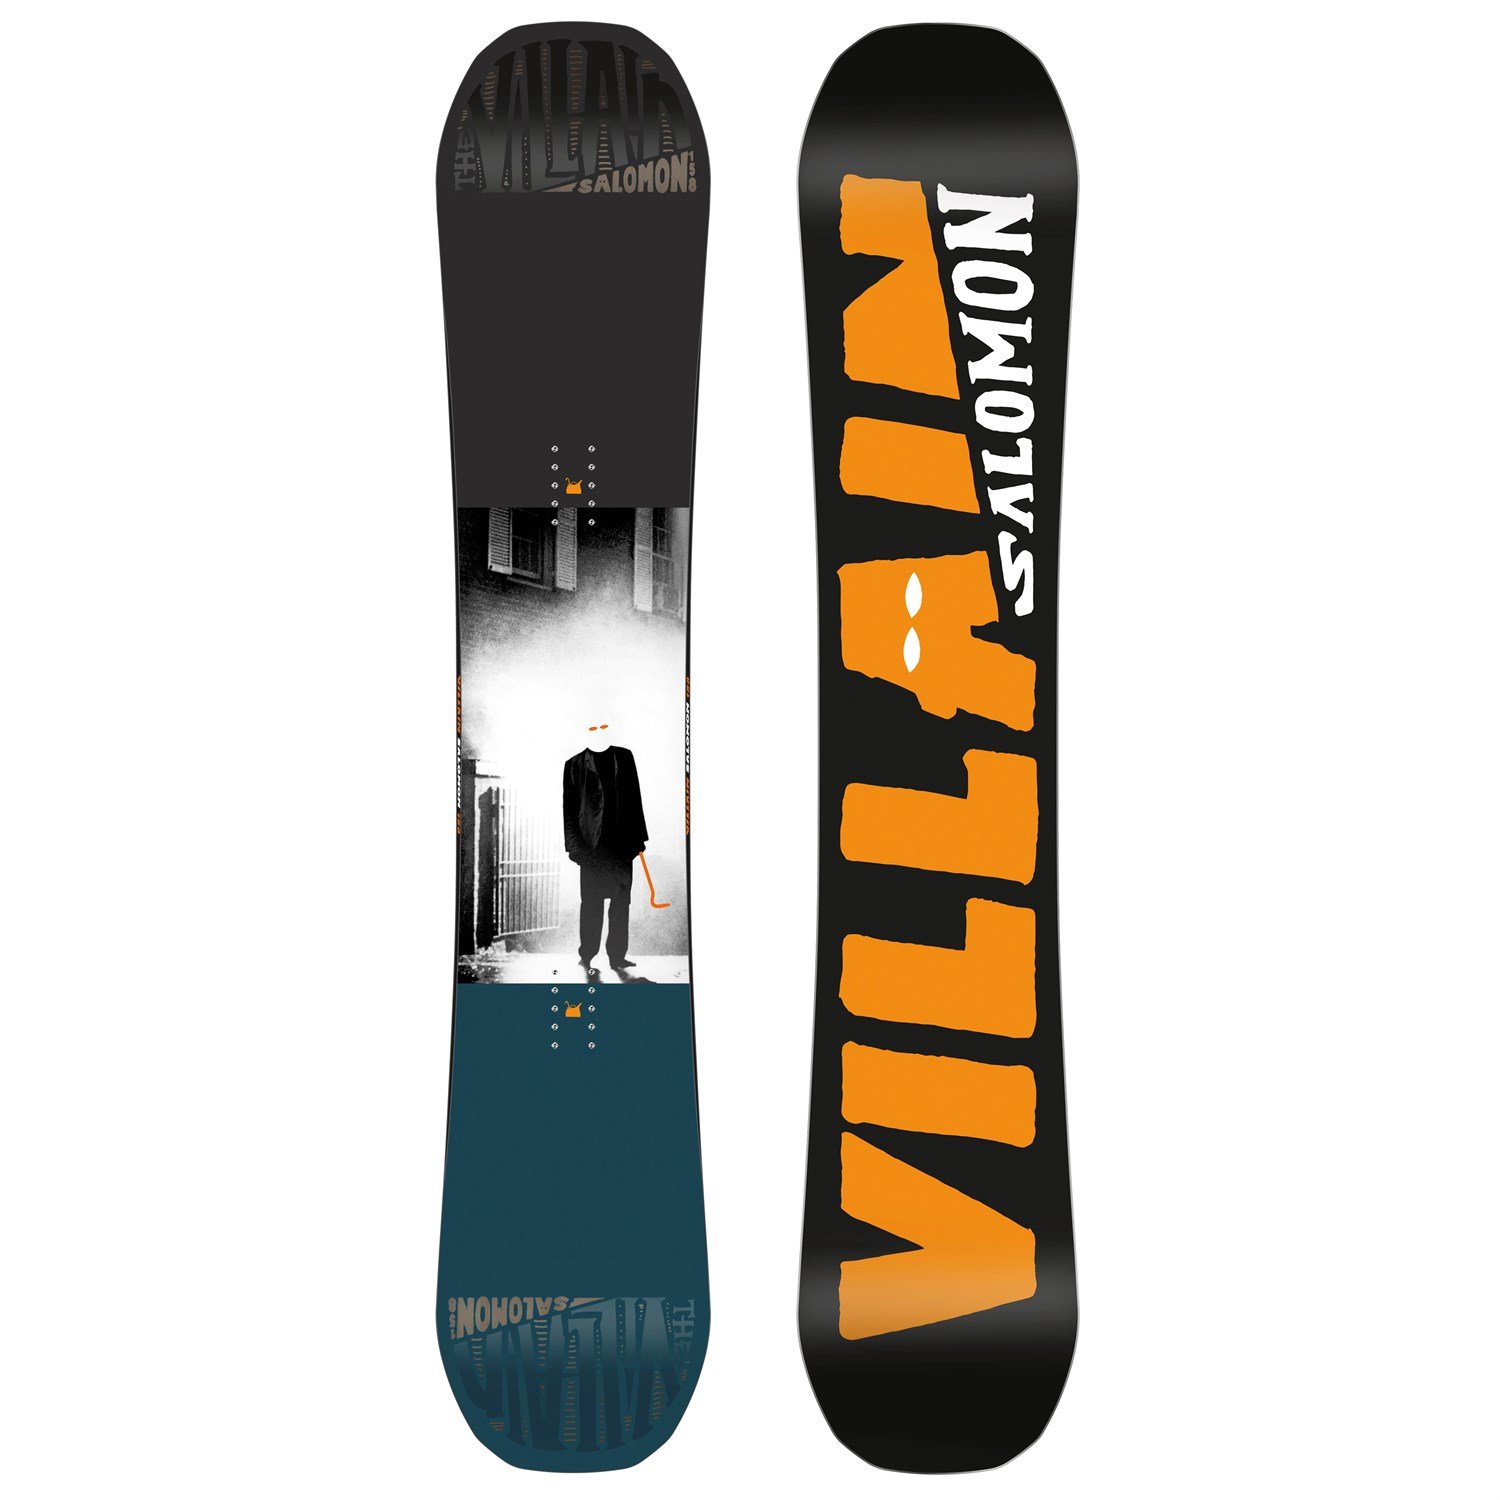 opleggen metgezel Groenland Salomon The Villain Snowboard 2018 | evo